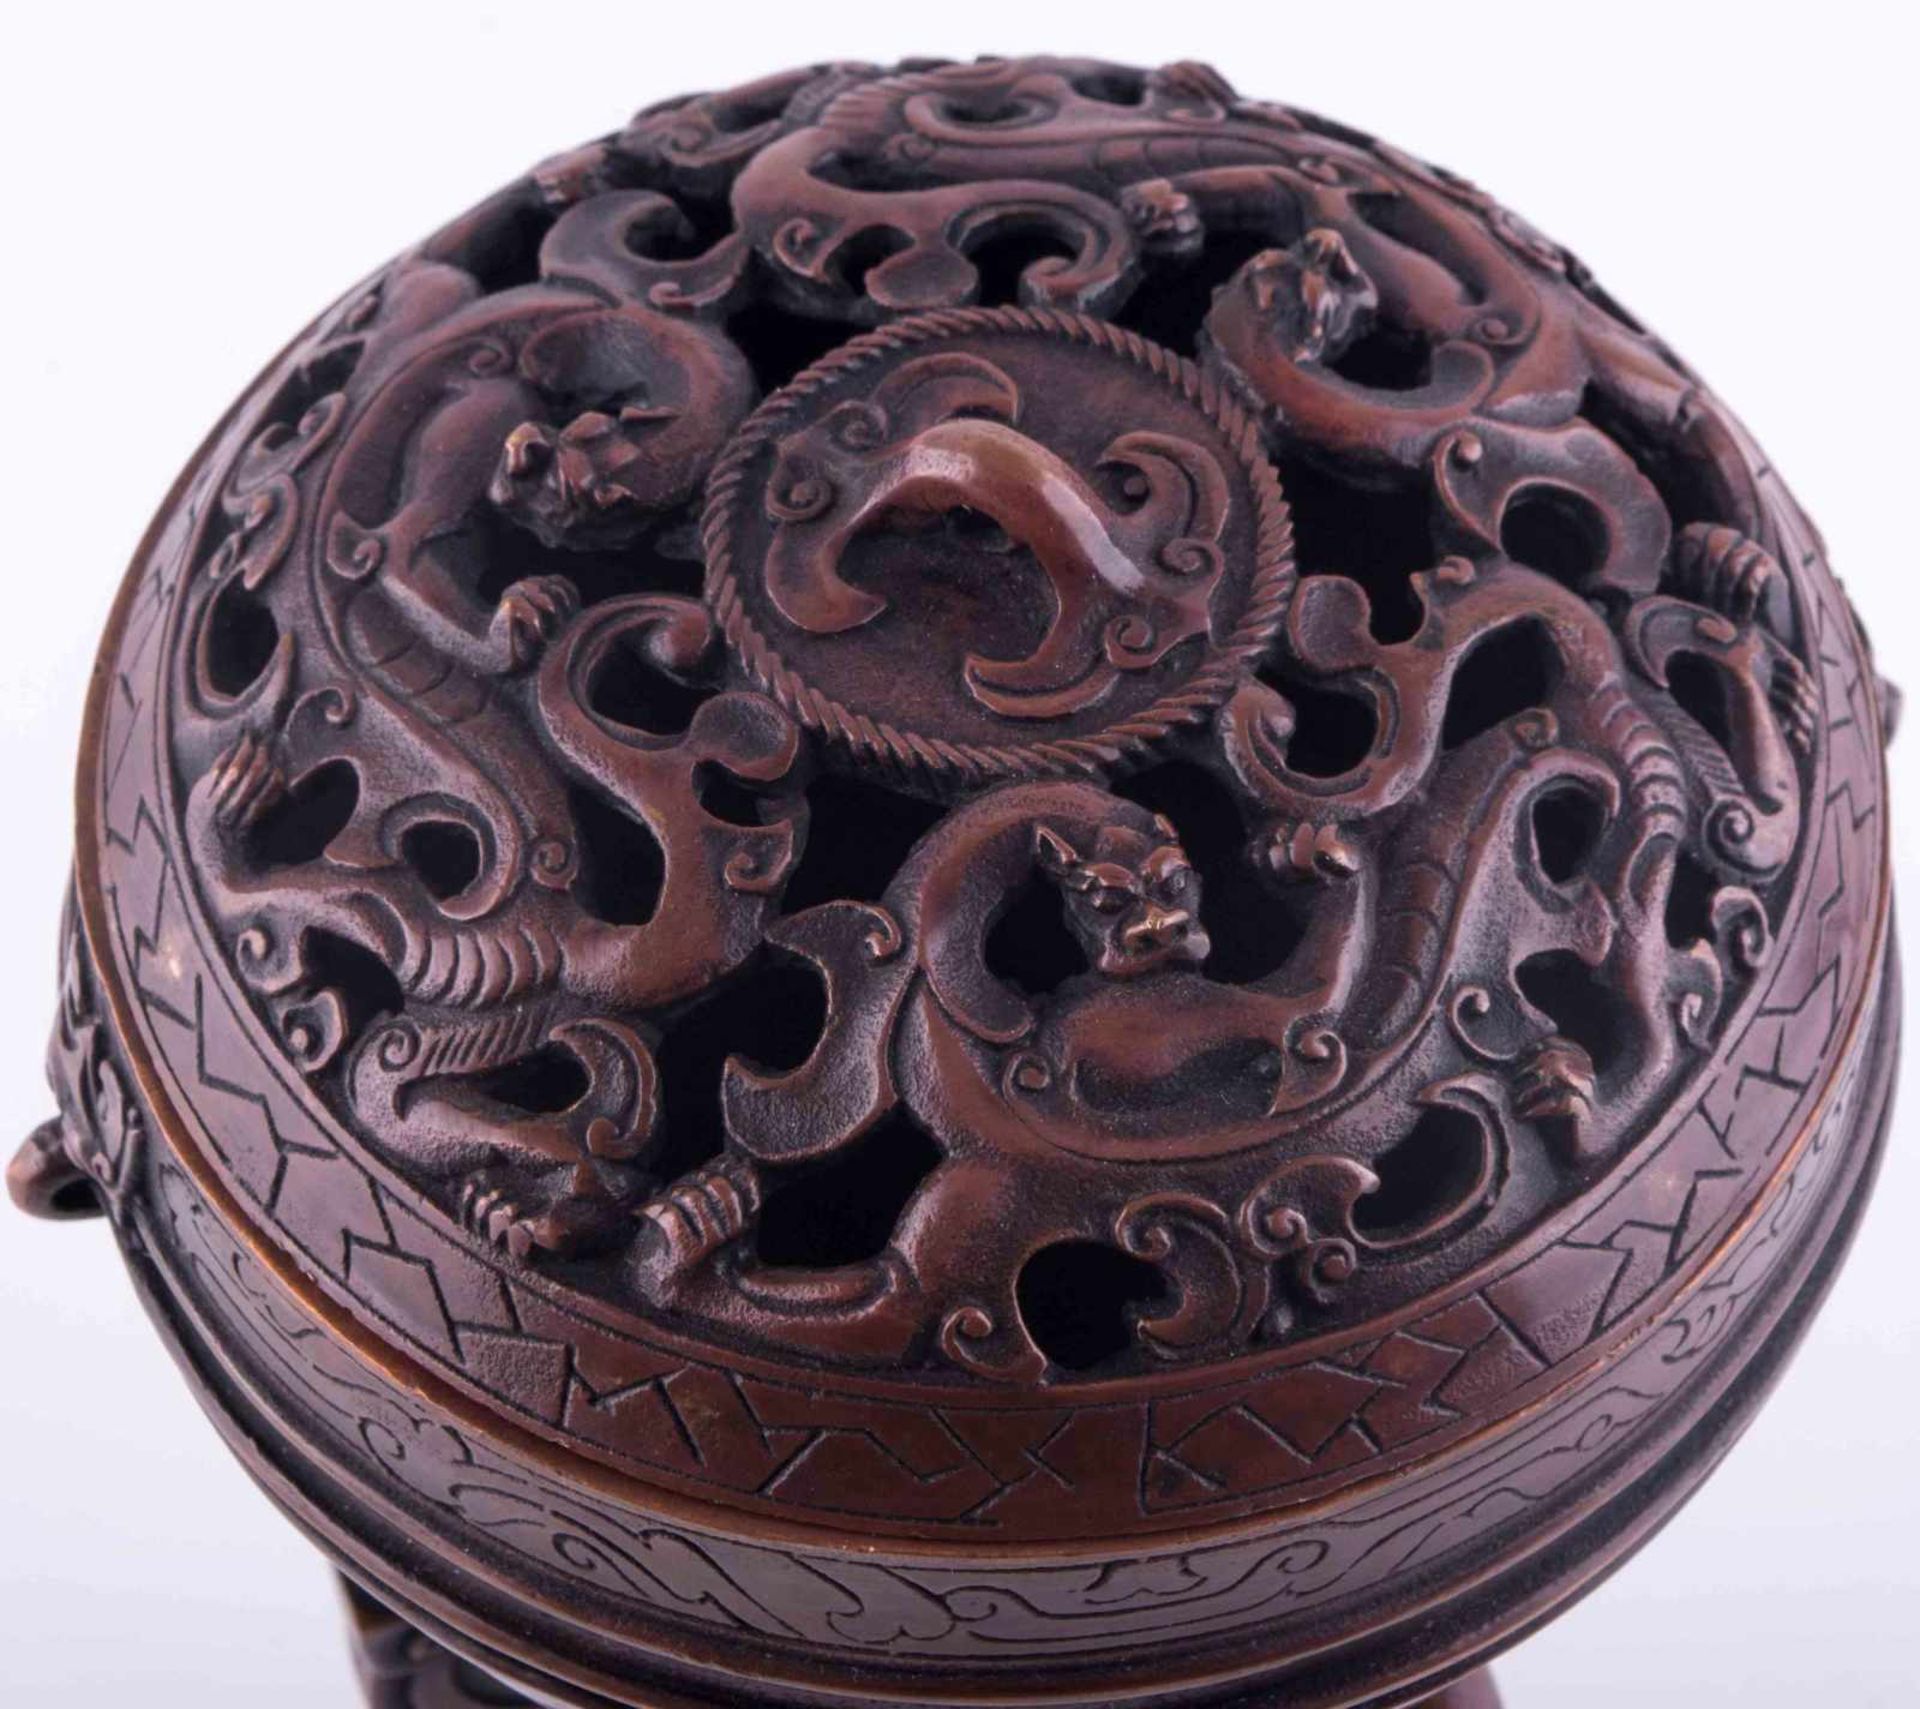 Weihrauchbrenner China 19. Jhd. / Incense burner, China 19th century Bronze, H: 22 cm - Image 3 of 4